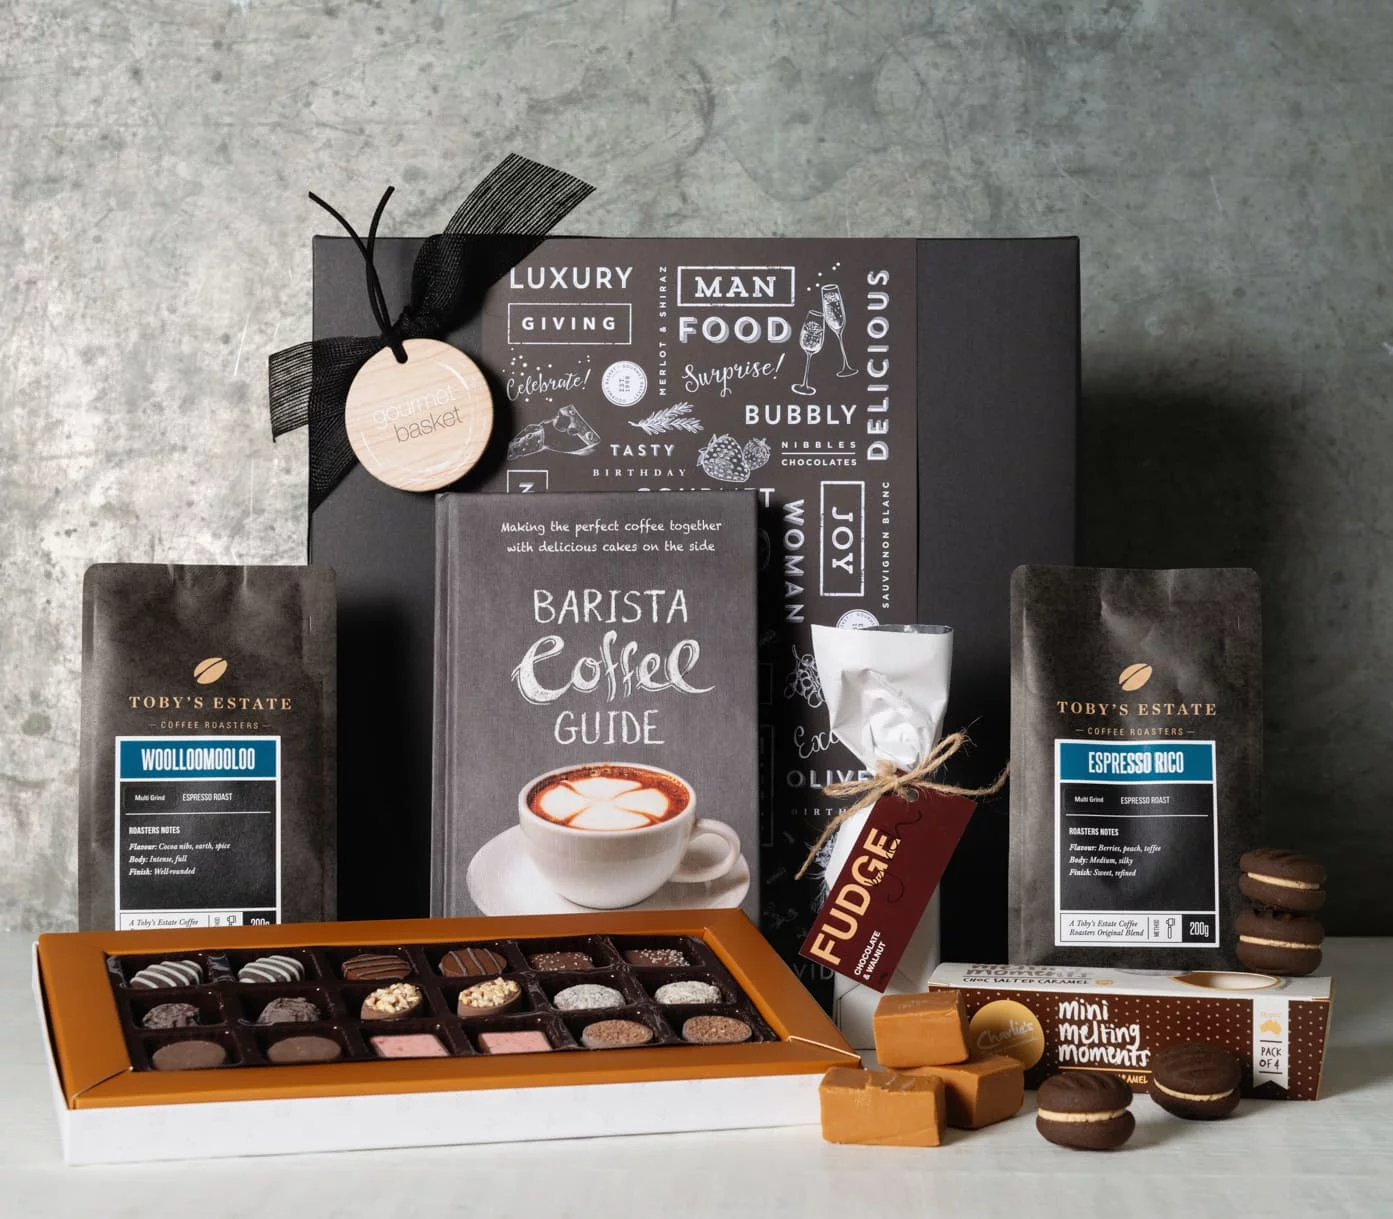 Coffee Chococlate Lover 2019 LR.jpg | Stay at Home Mum.com.au